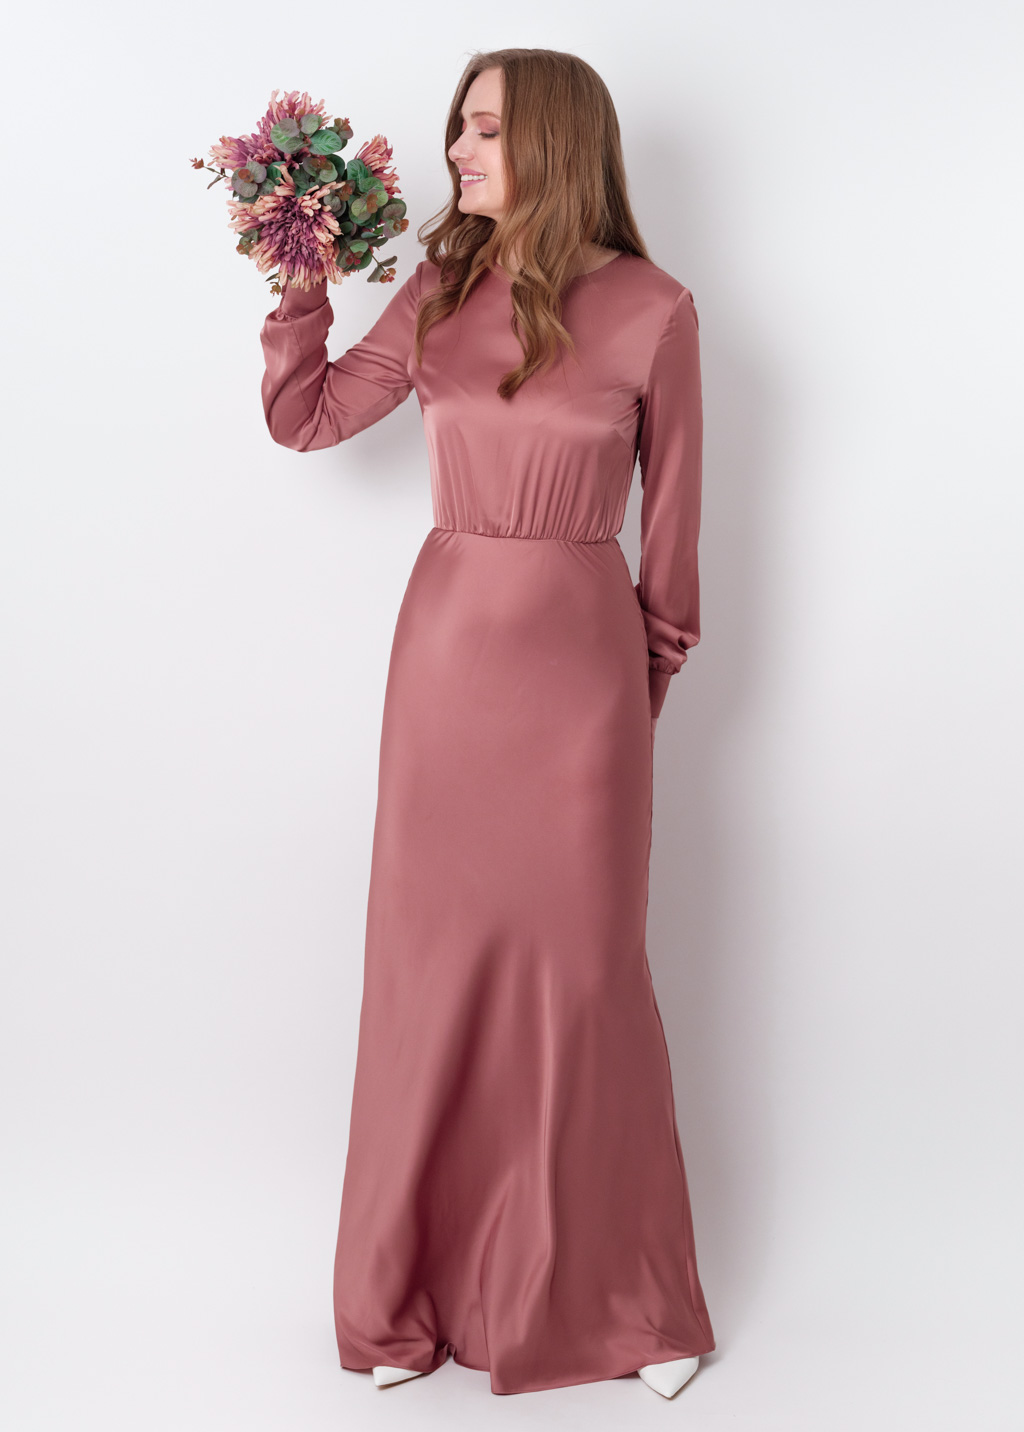 Champagne rose silk long dress